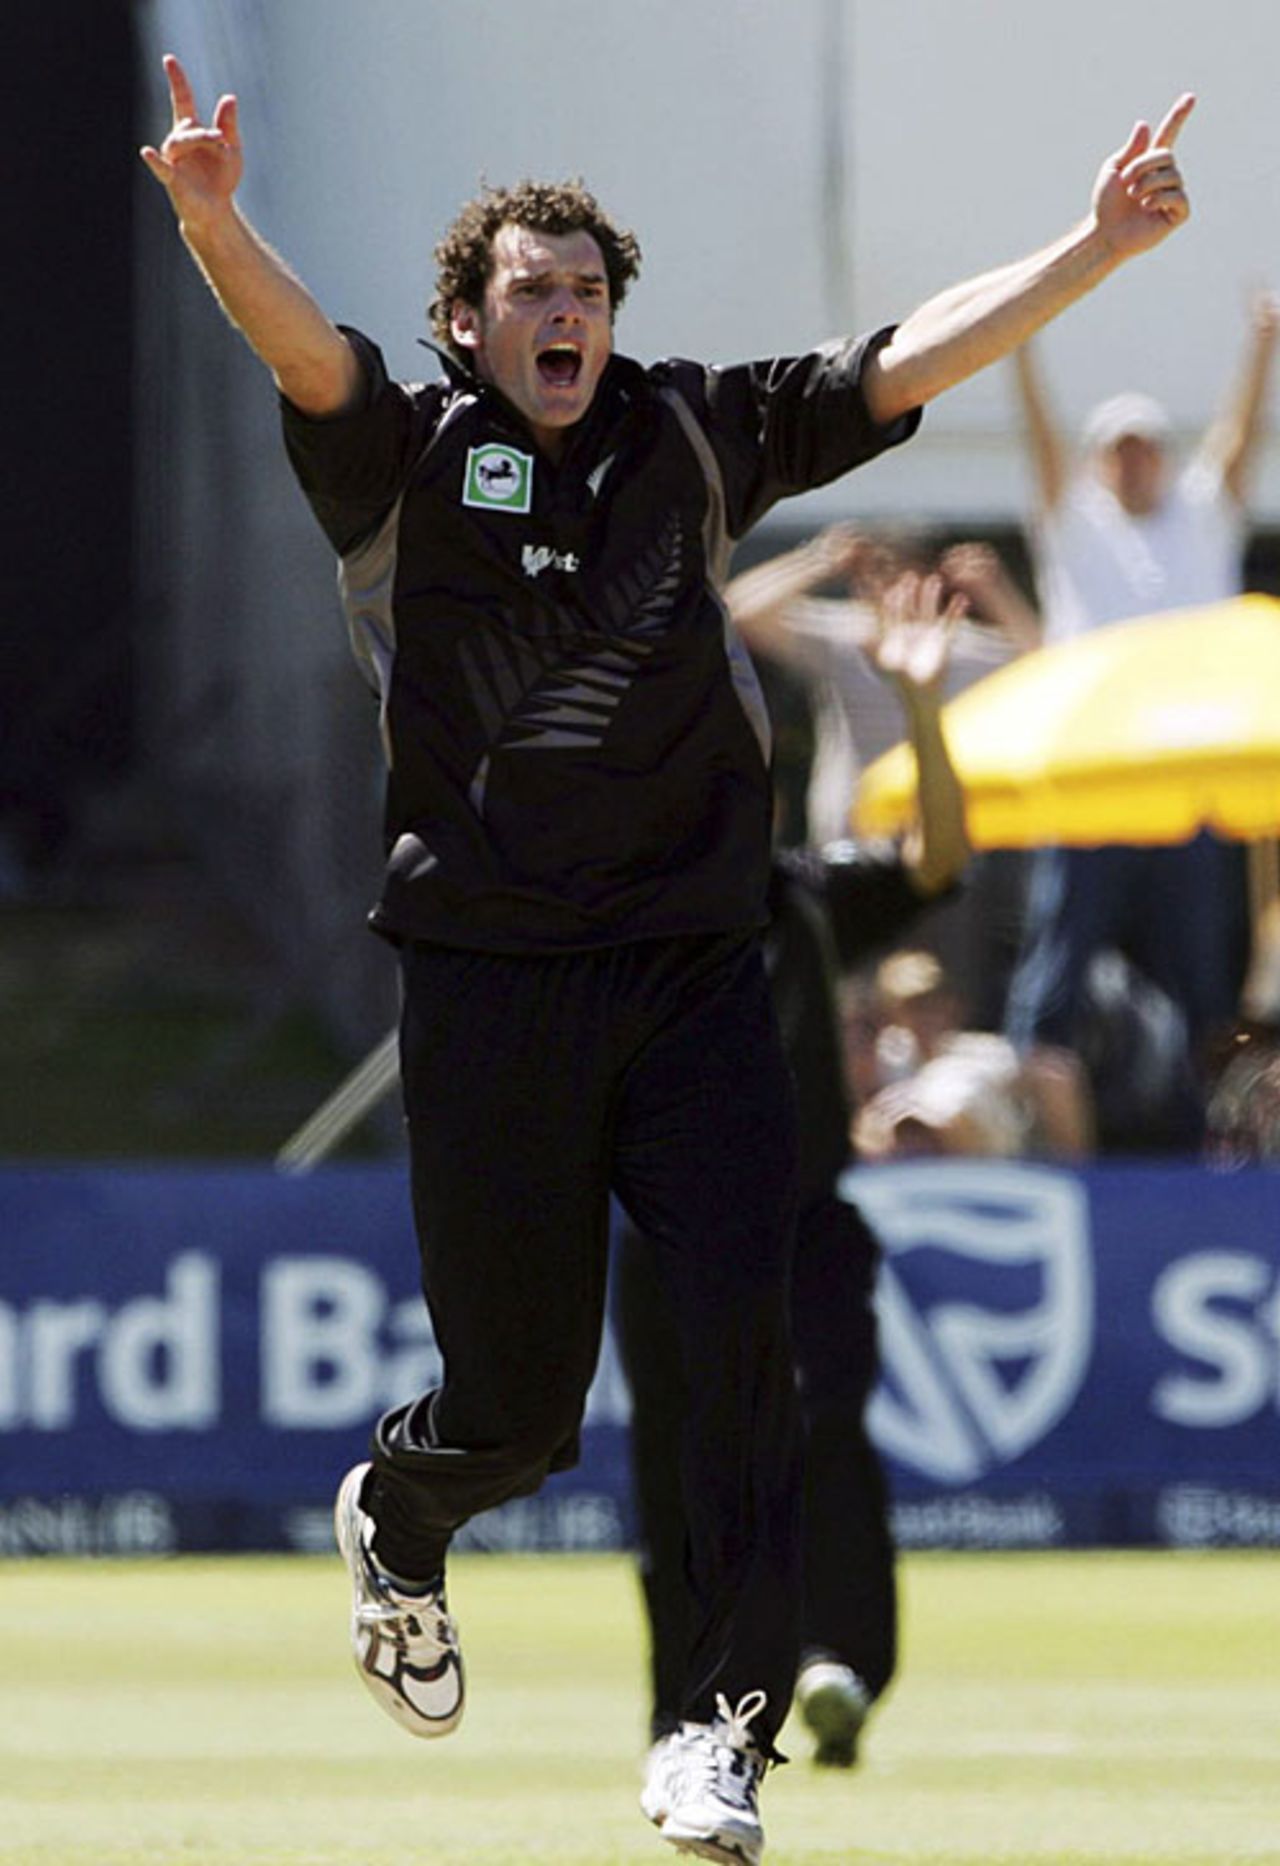 Kyle Mills dismissed both the South African openers for ducks, South Africa v New Zealand, 2nd ODI, Port Elizabeth, November 30, 2007